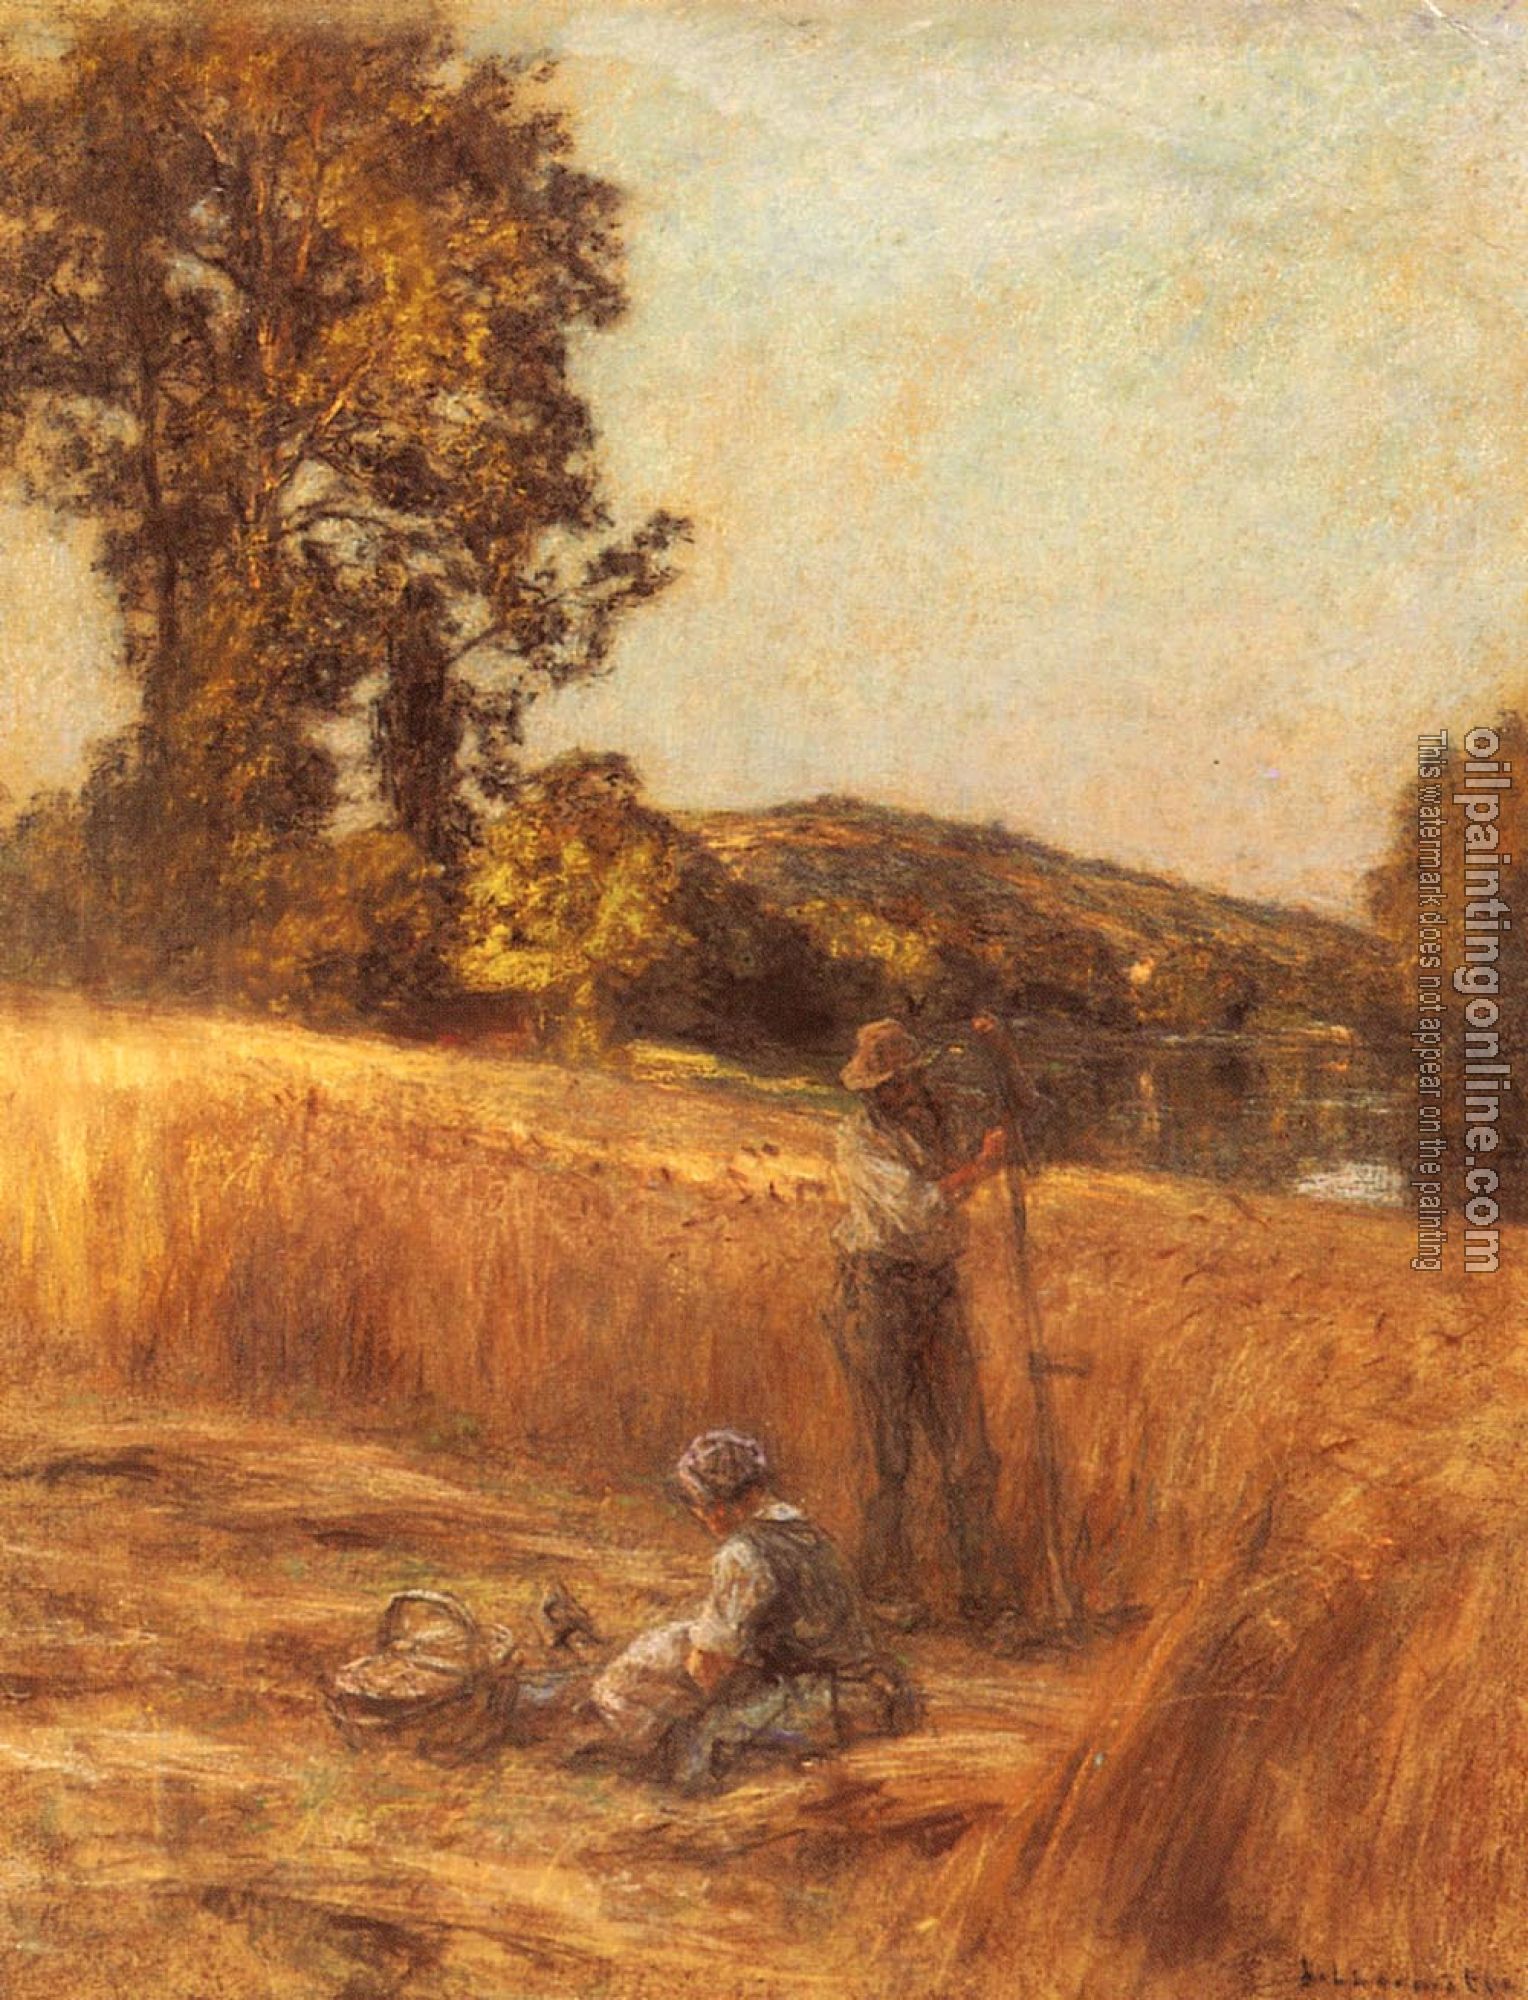 Lhermitte, Leon Augustin - The Harvesters